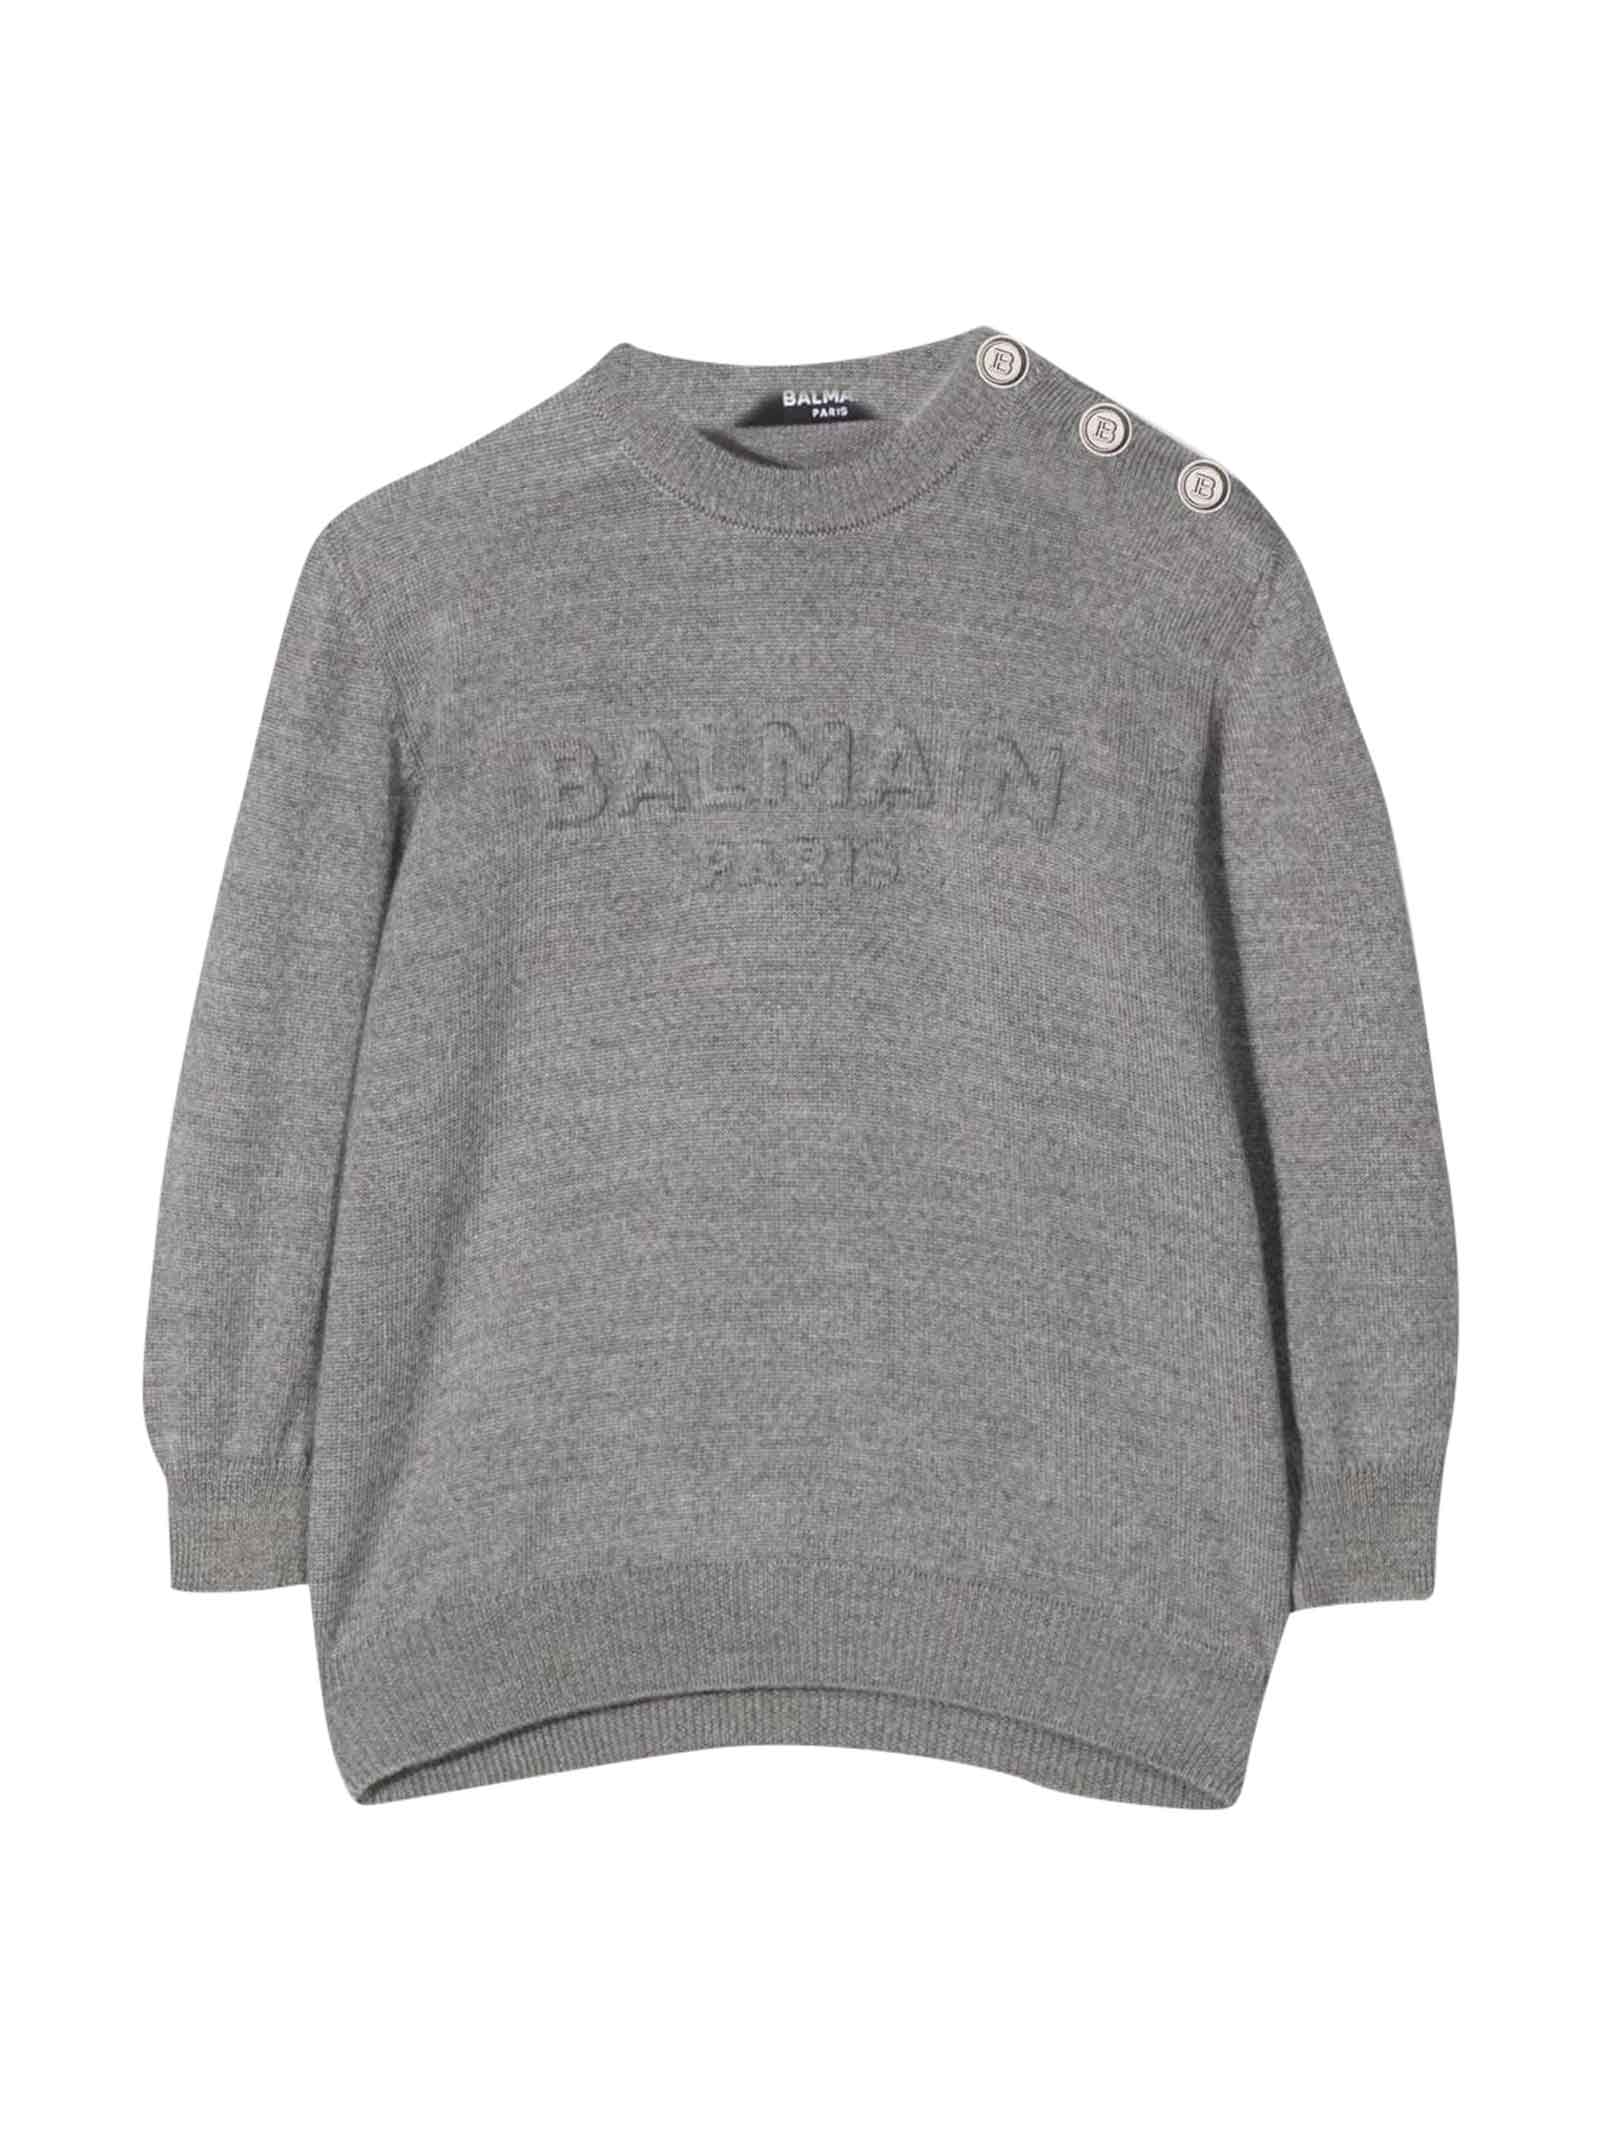 Balmain Newborn Gray Sweater